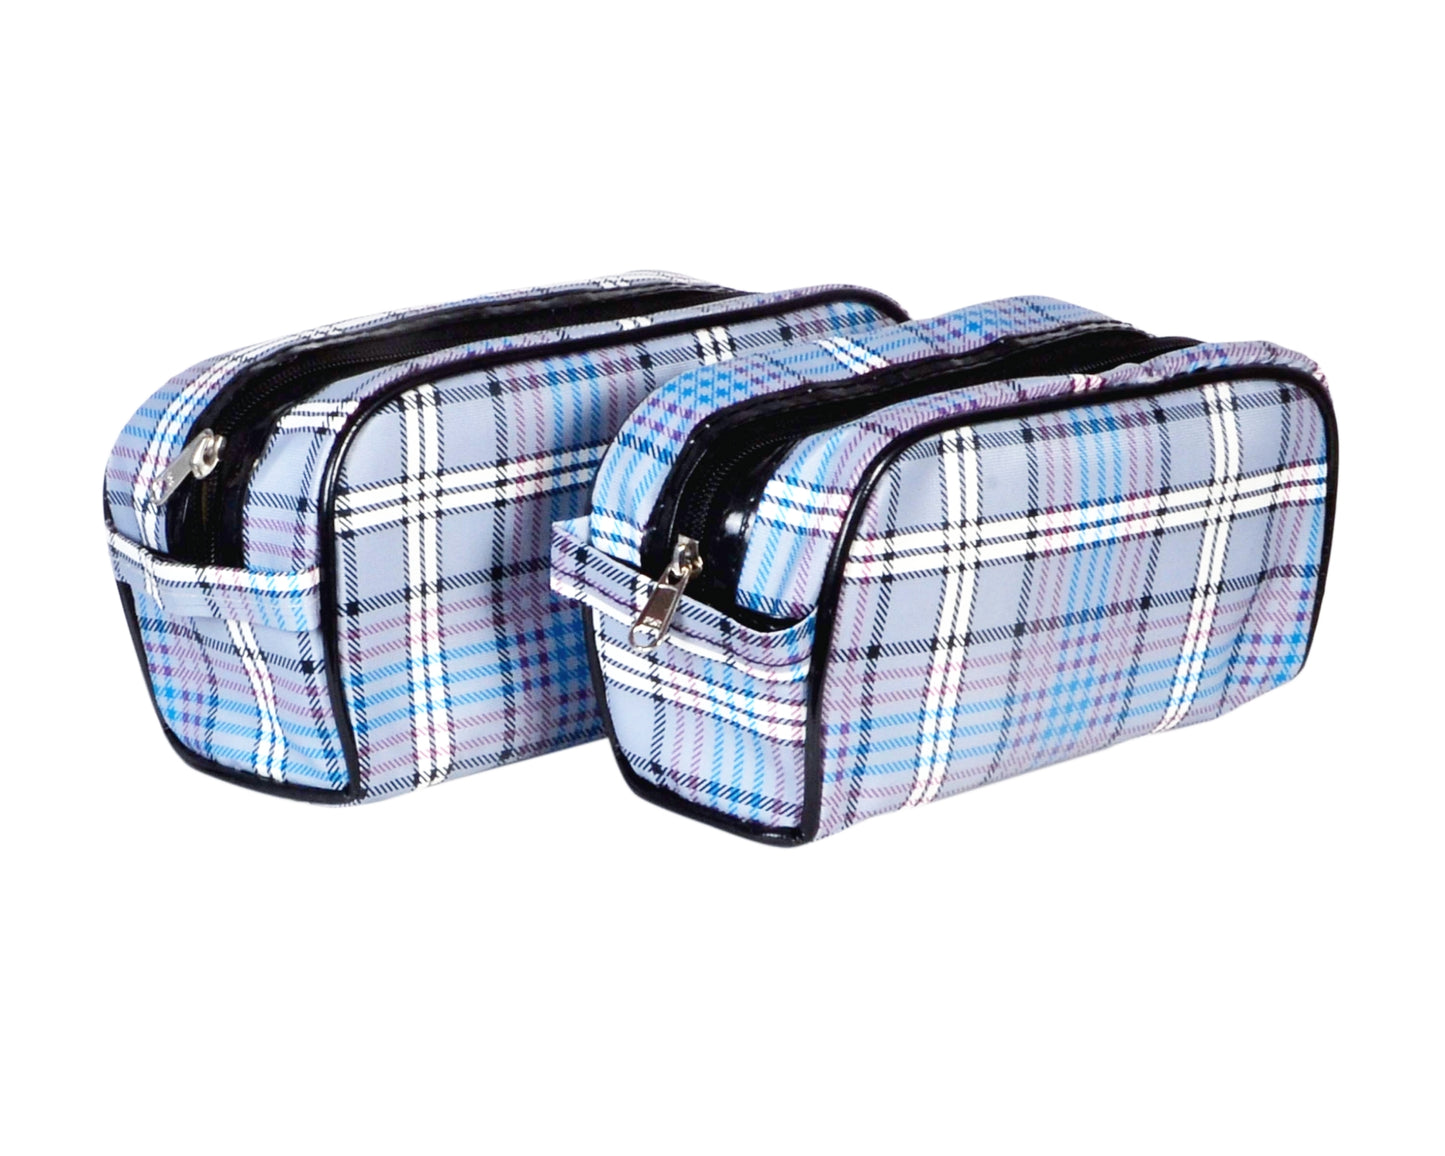 BATUTA HUB - Multipurpose Set of 2 Cosmetic Bag Pouches for Storage, Travel Kit, Makeup Pouch Kit, Storage Organizers, Toiletry Bag